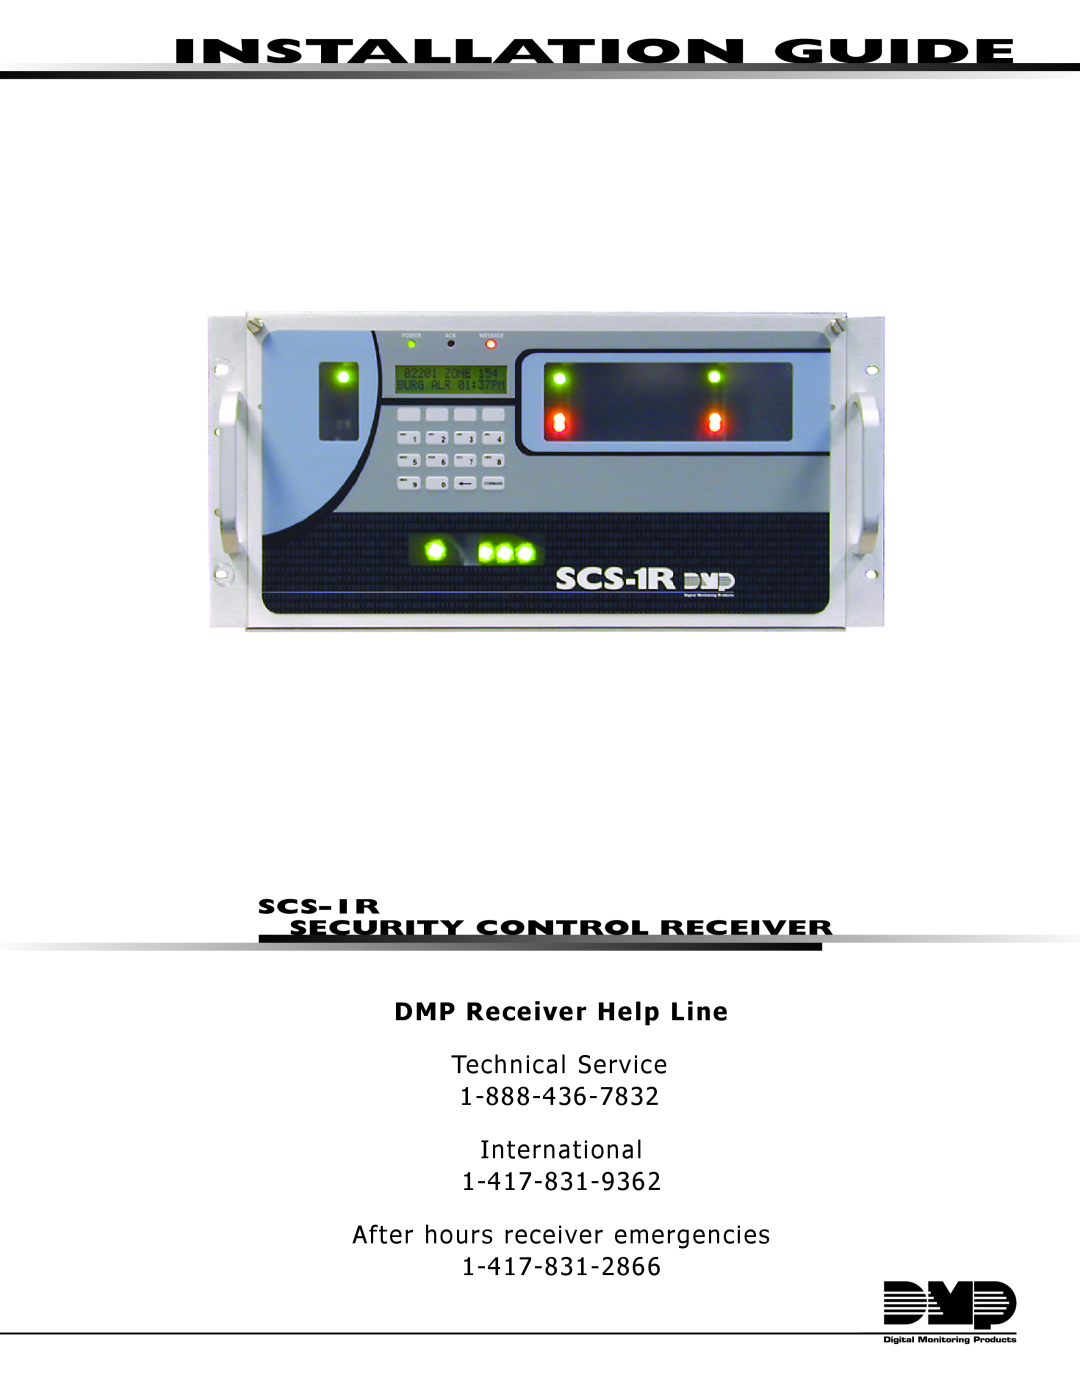 DMP Electronics manual DMP Receiver Help Line, SCS-1R Security Control Receiver, Installation Guide 